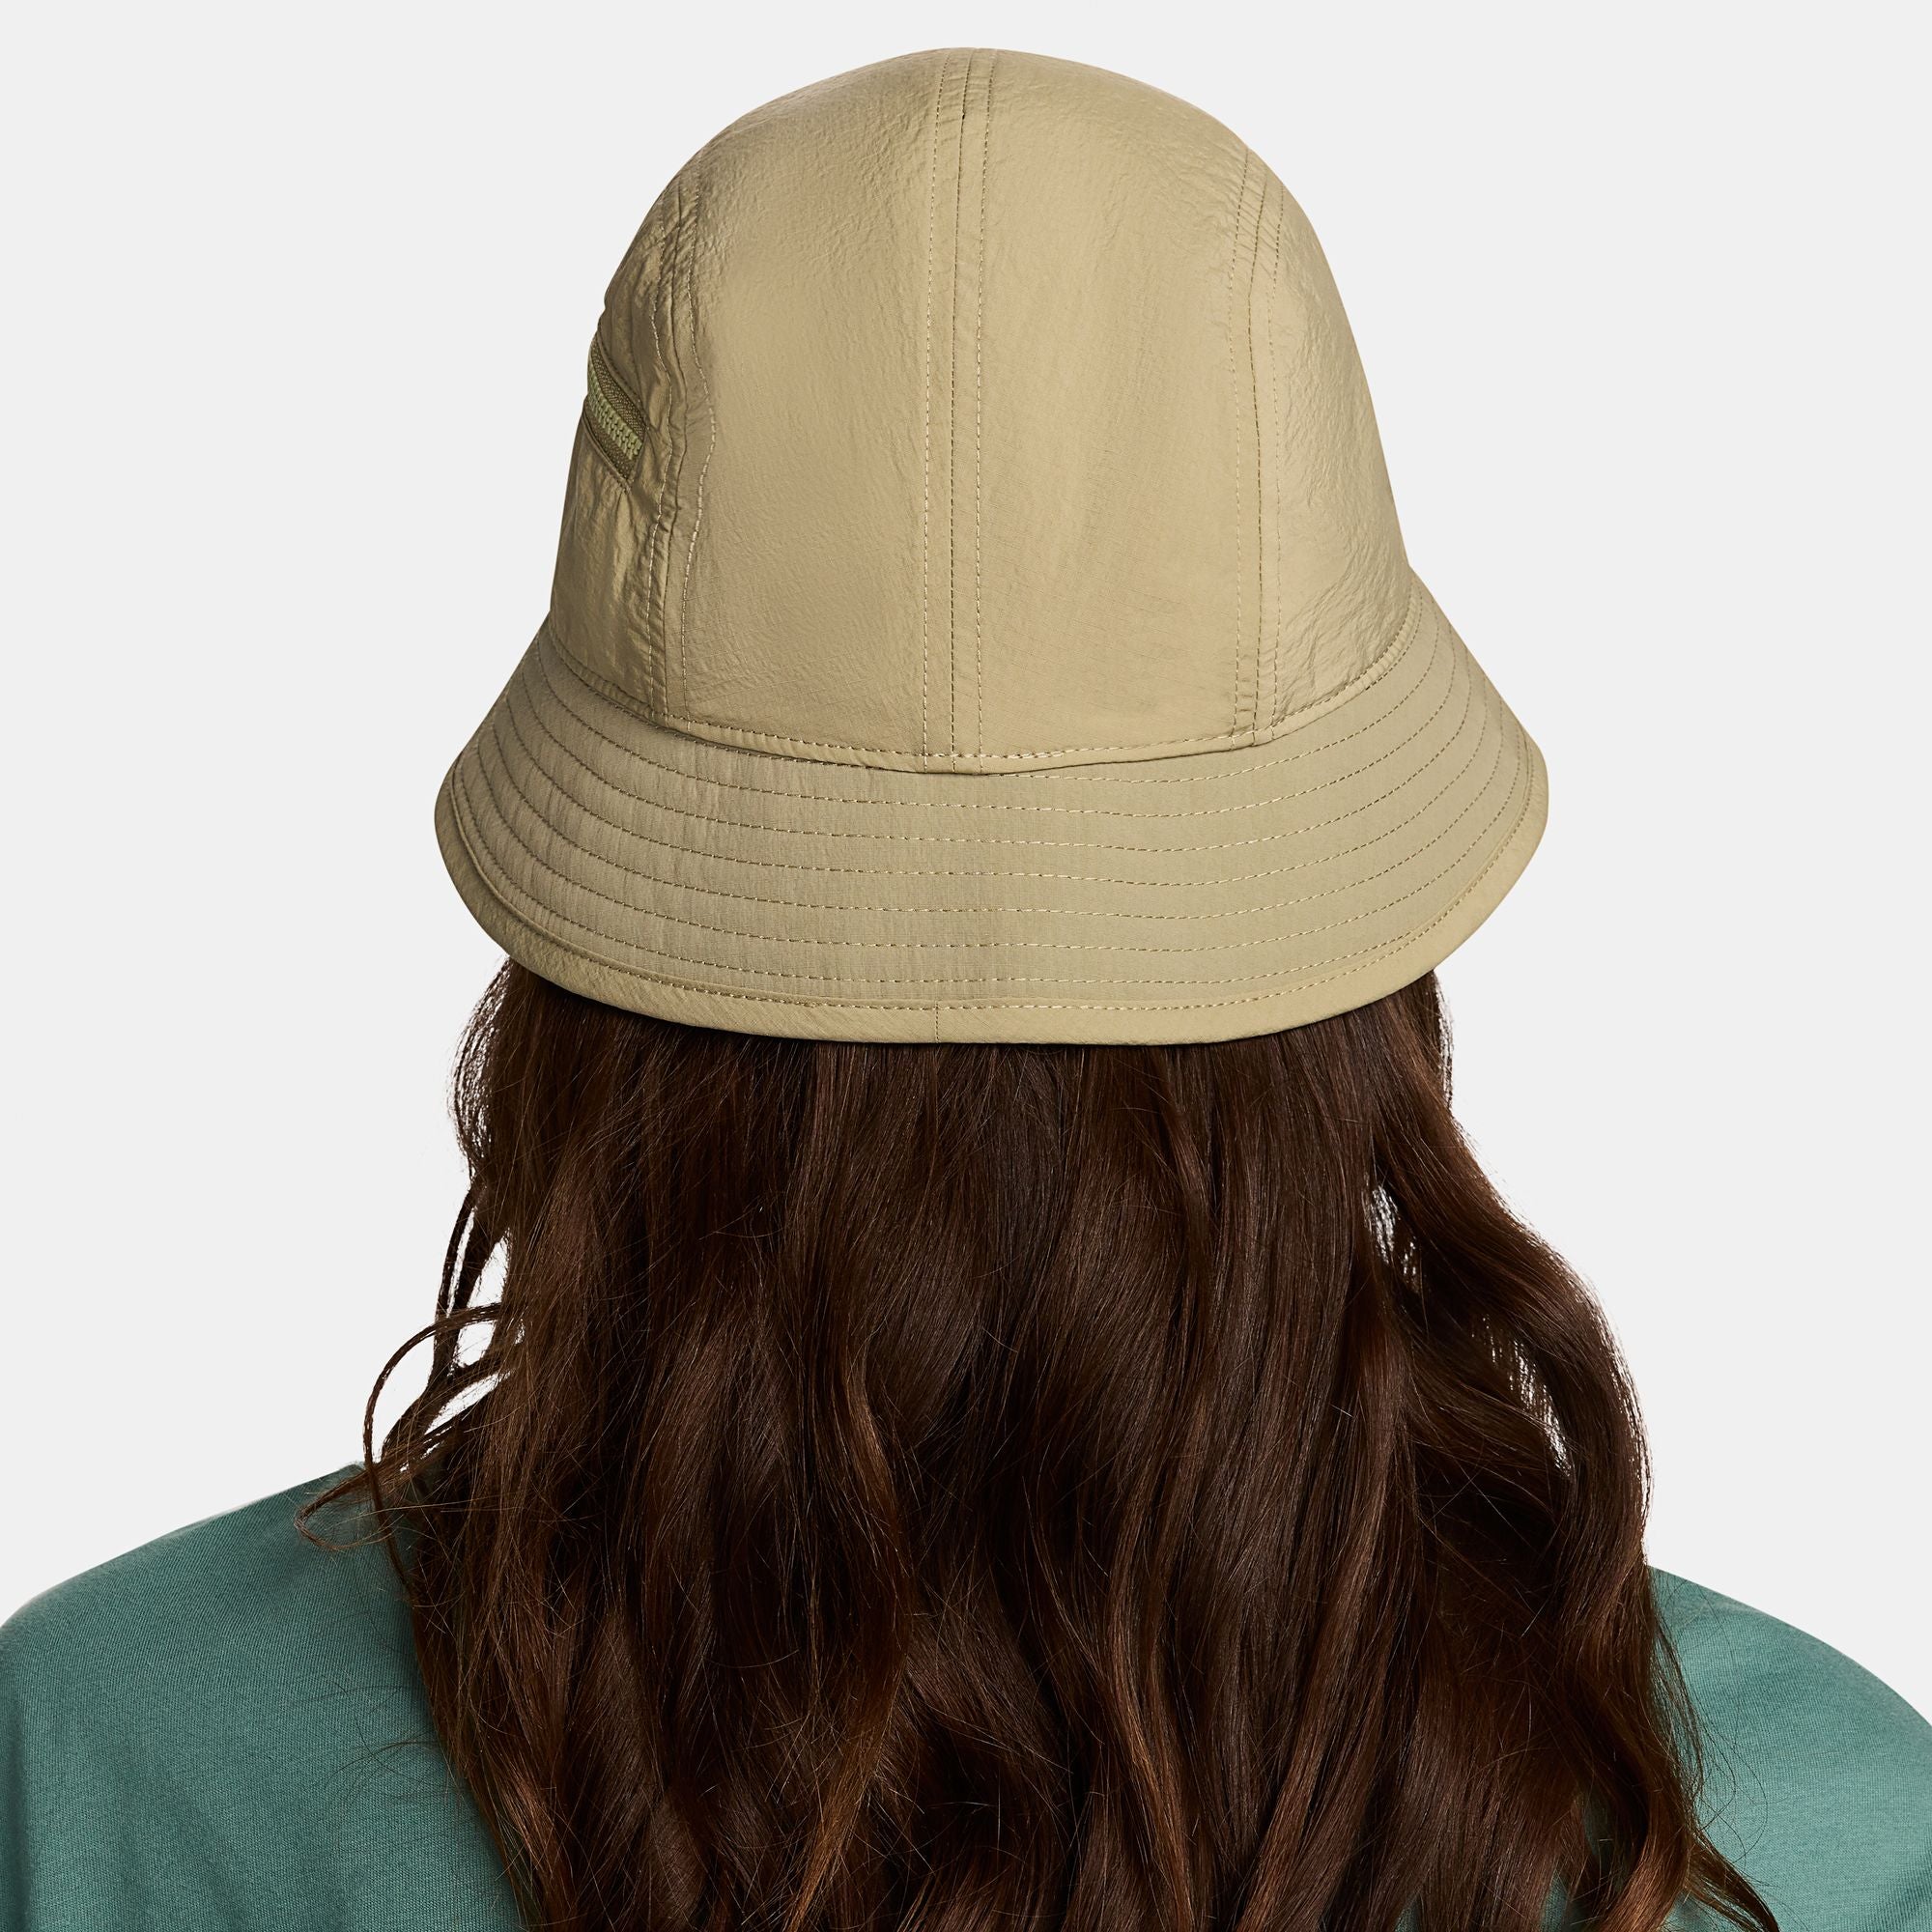 Nike Apex Bucket Hat - Neutral Olive/Vintage Green